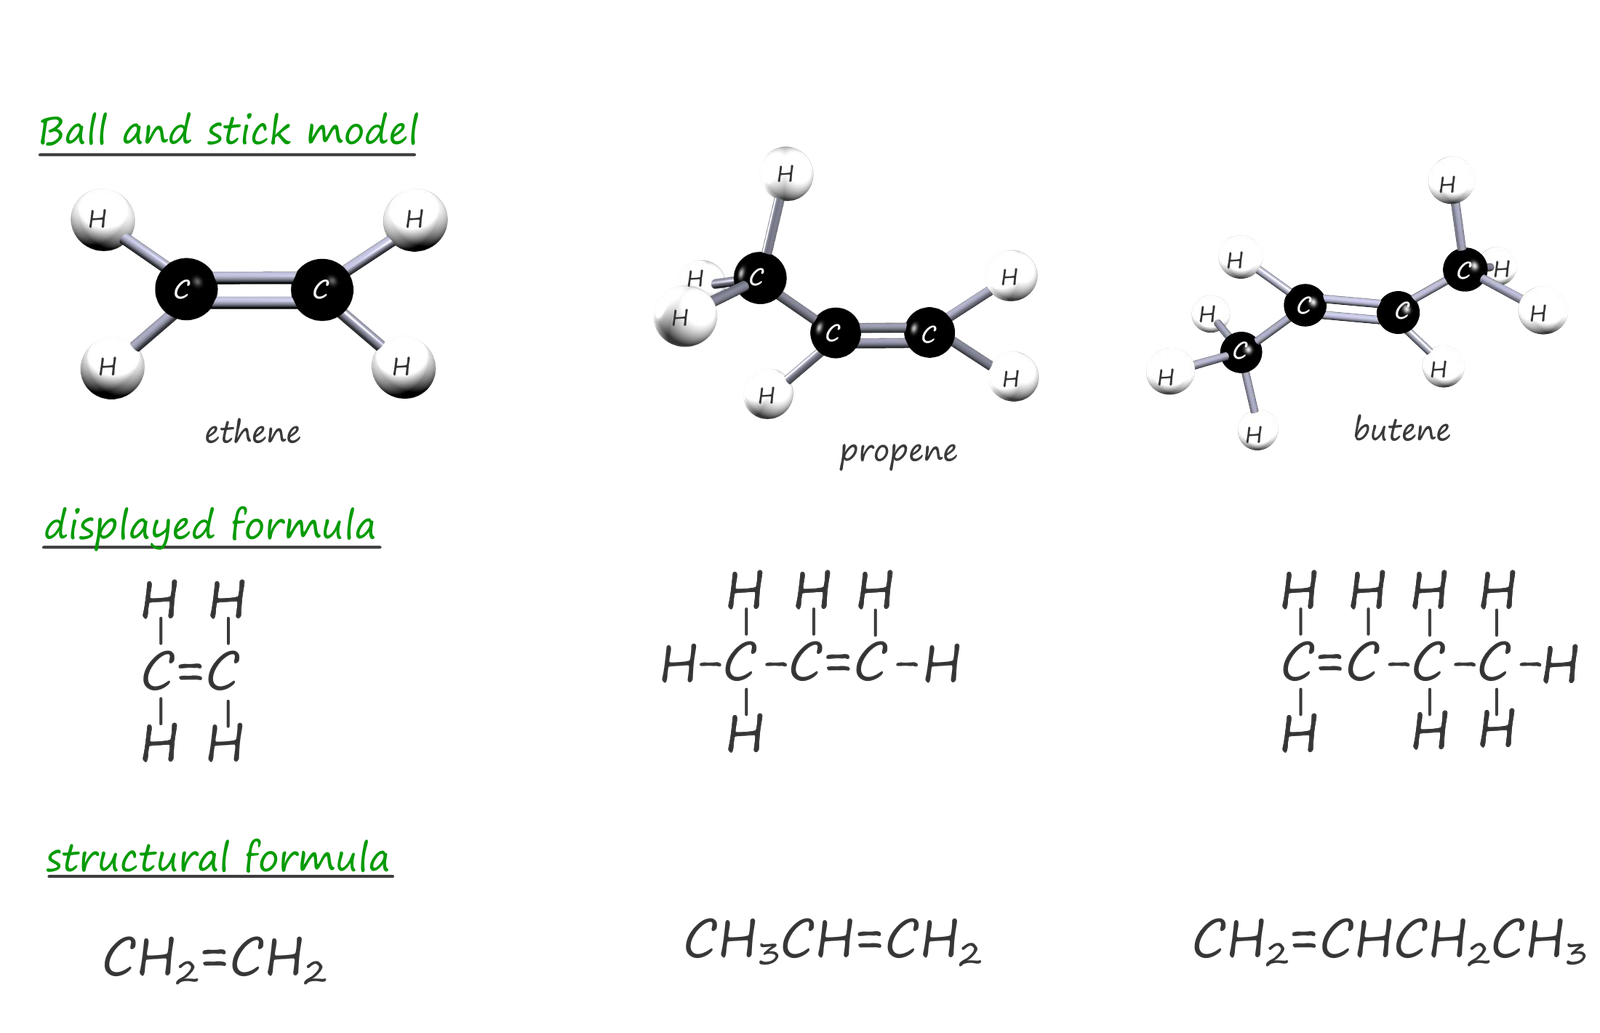 3D models, molecular formula, displayed, structural formulae for the first three alkenes, ethene, propene and butene.